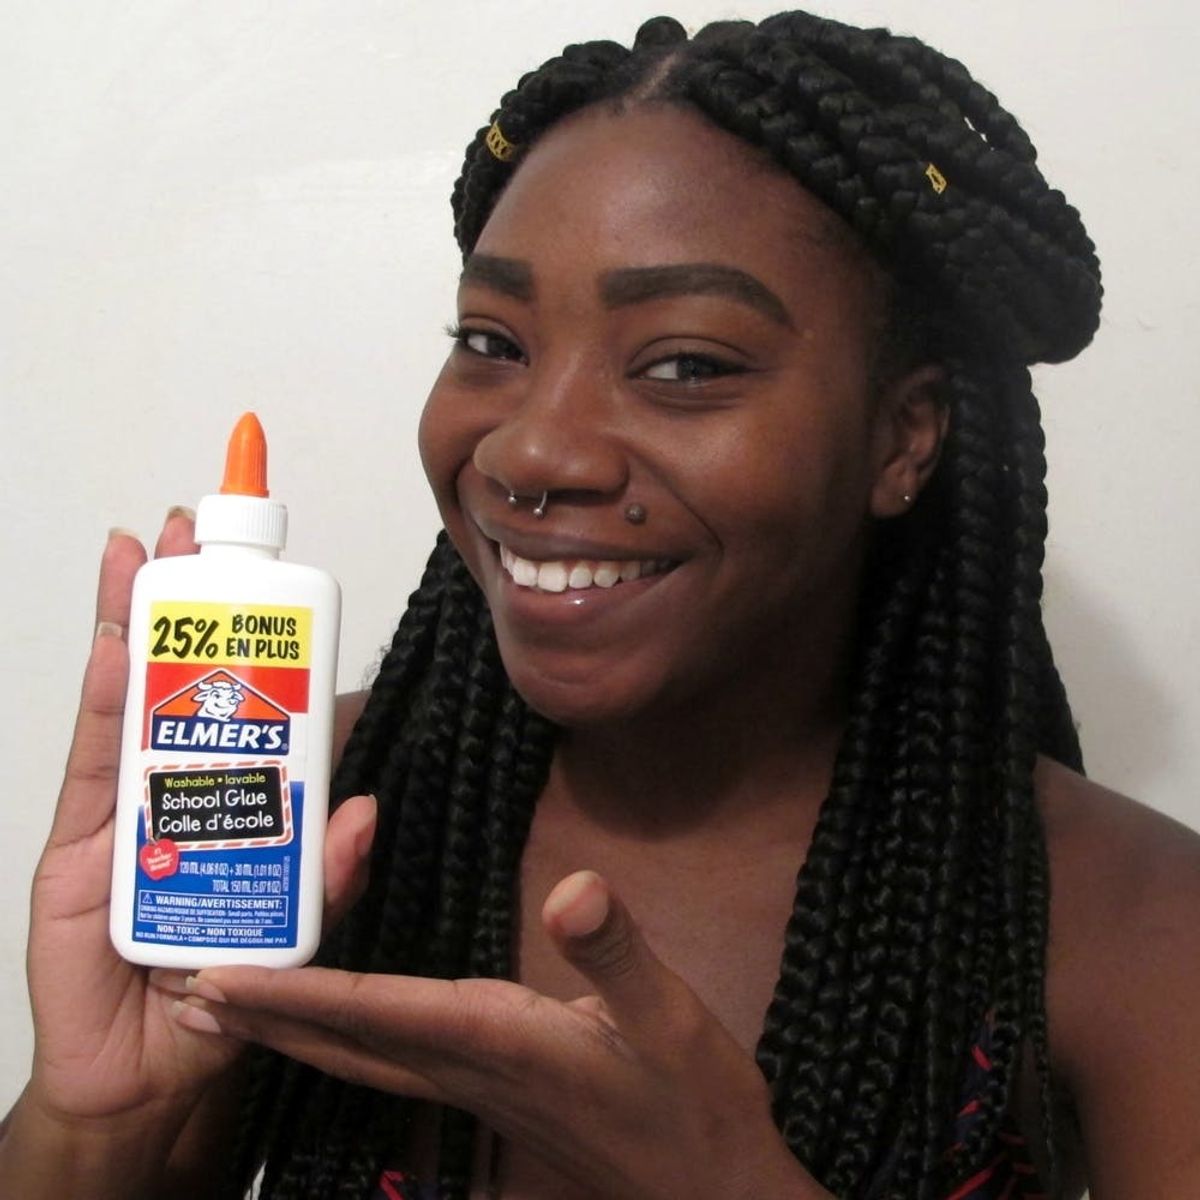 Skincare Hack: Can Glue Get Rid of Blackheads? Huda Thinks So